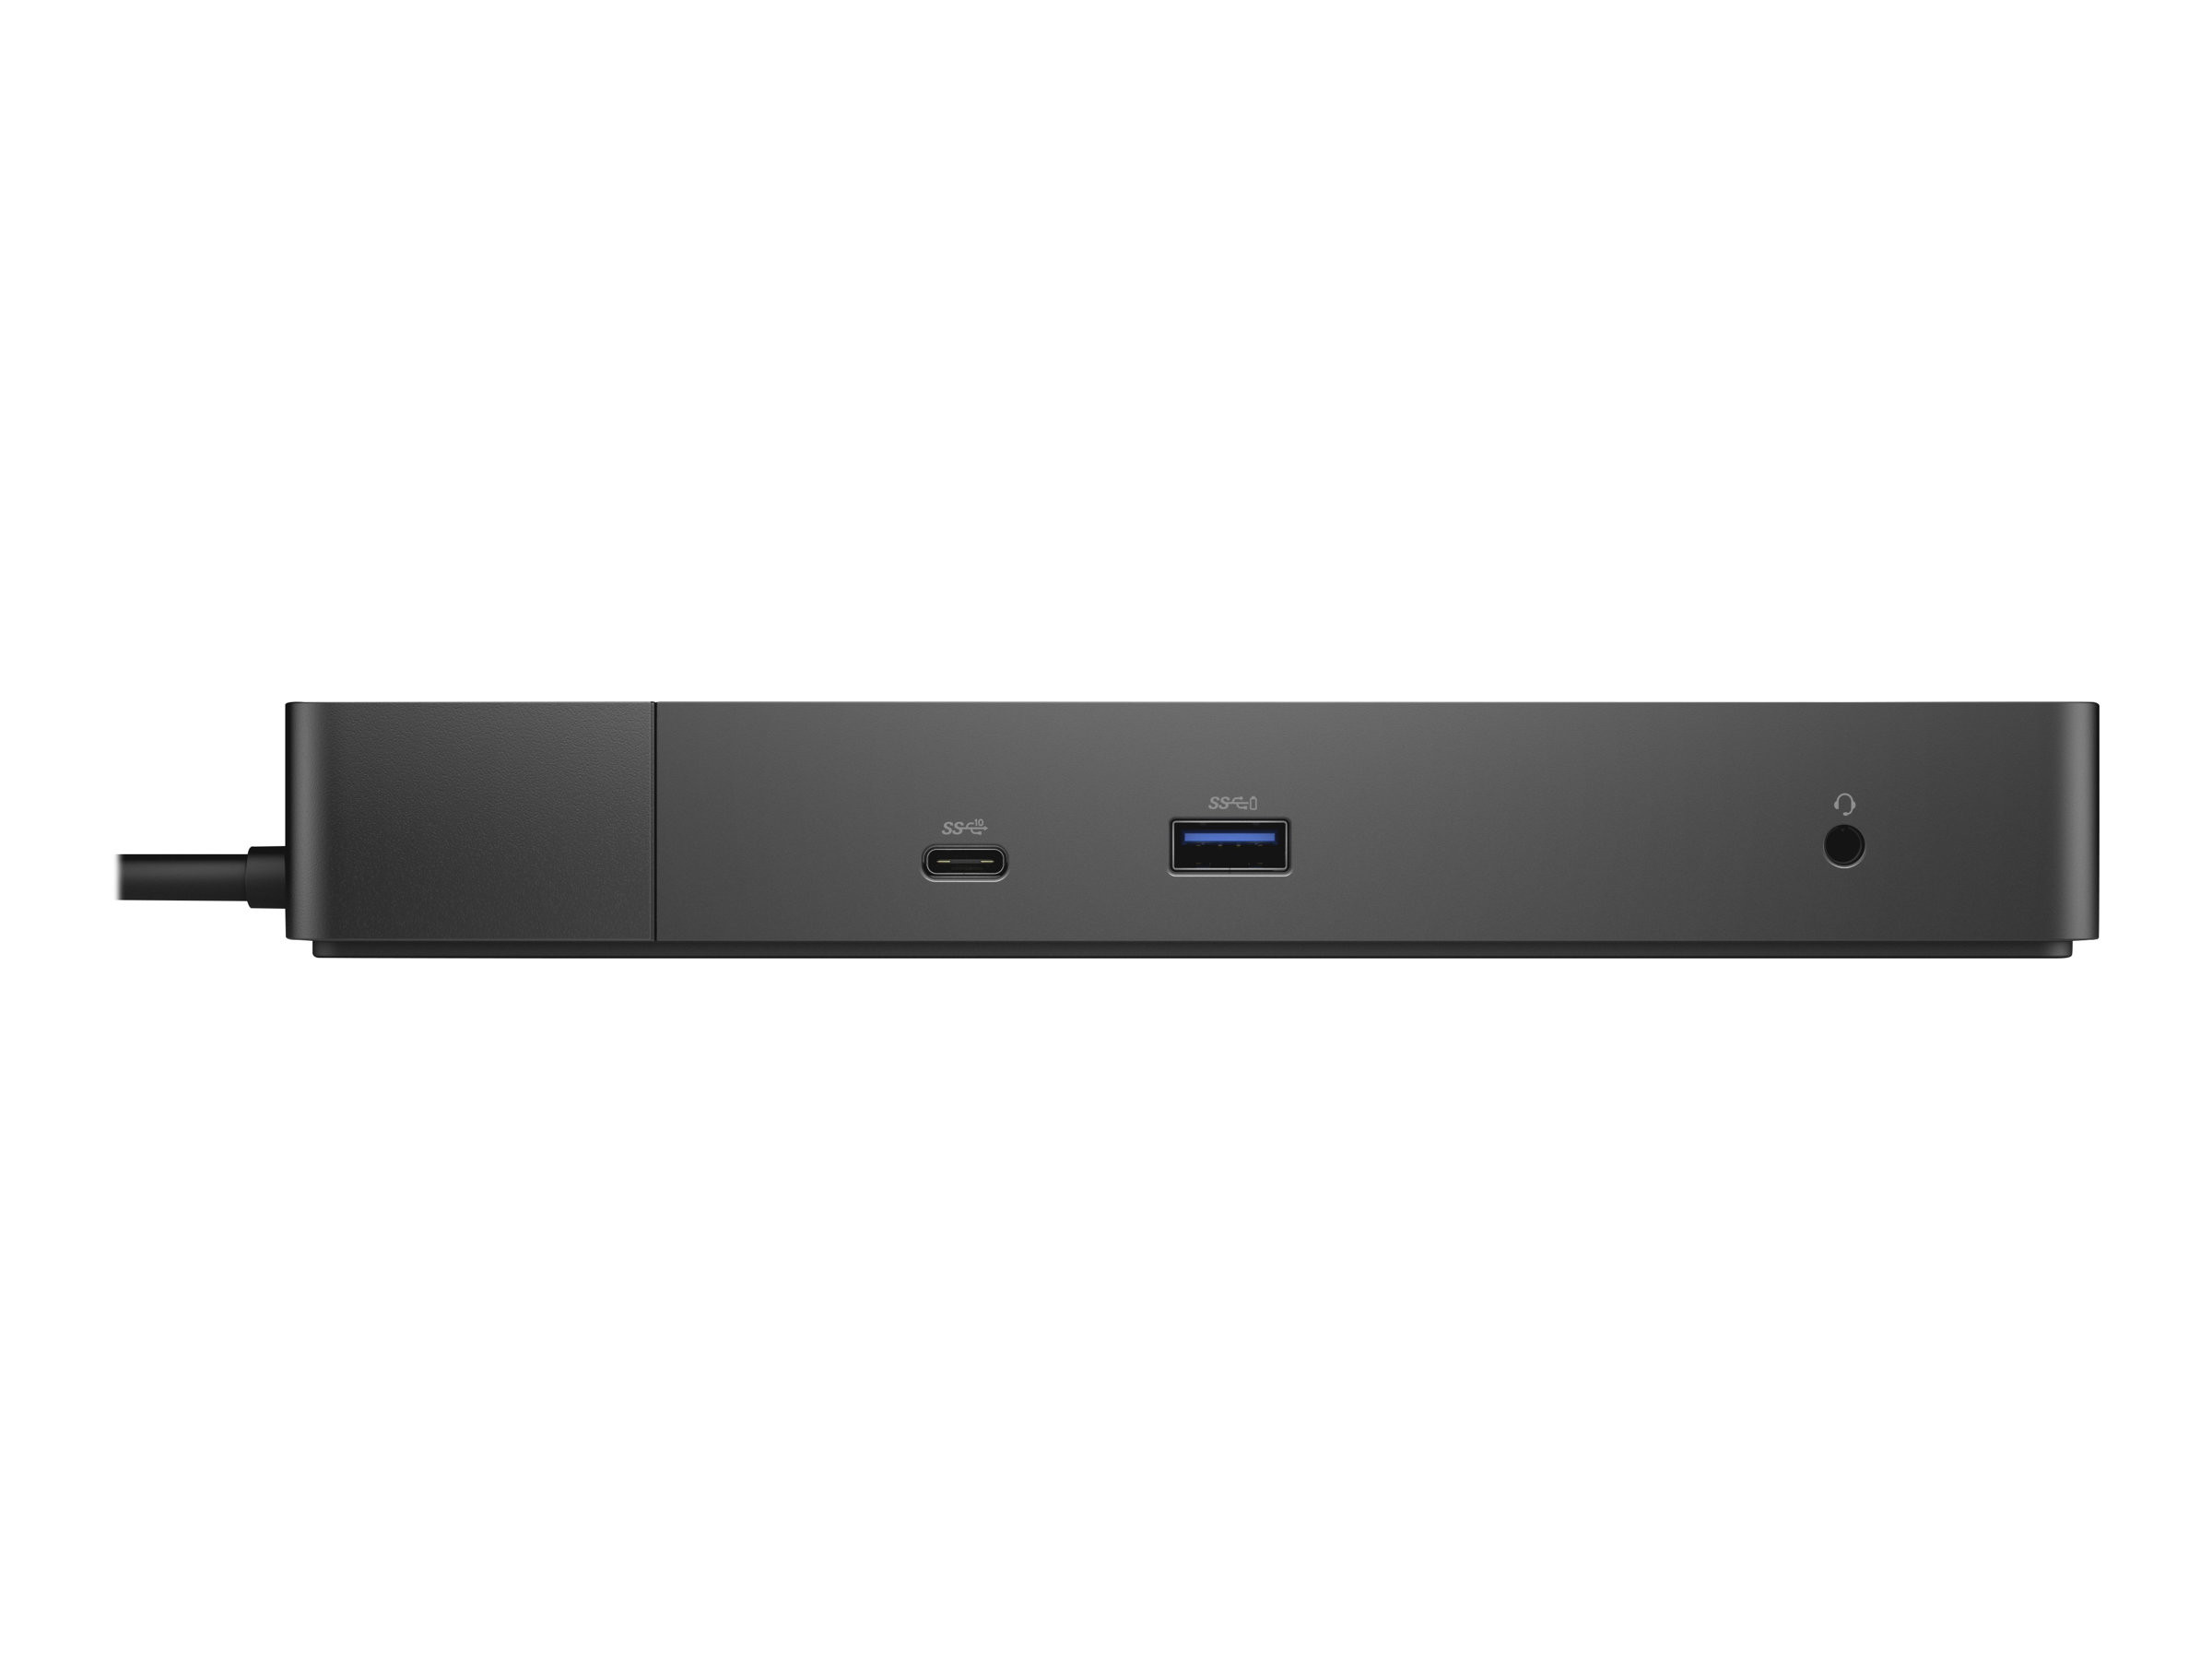 Dell USB-C WD19 K20A Dockingstation | ohne Netzteil